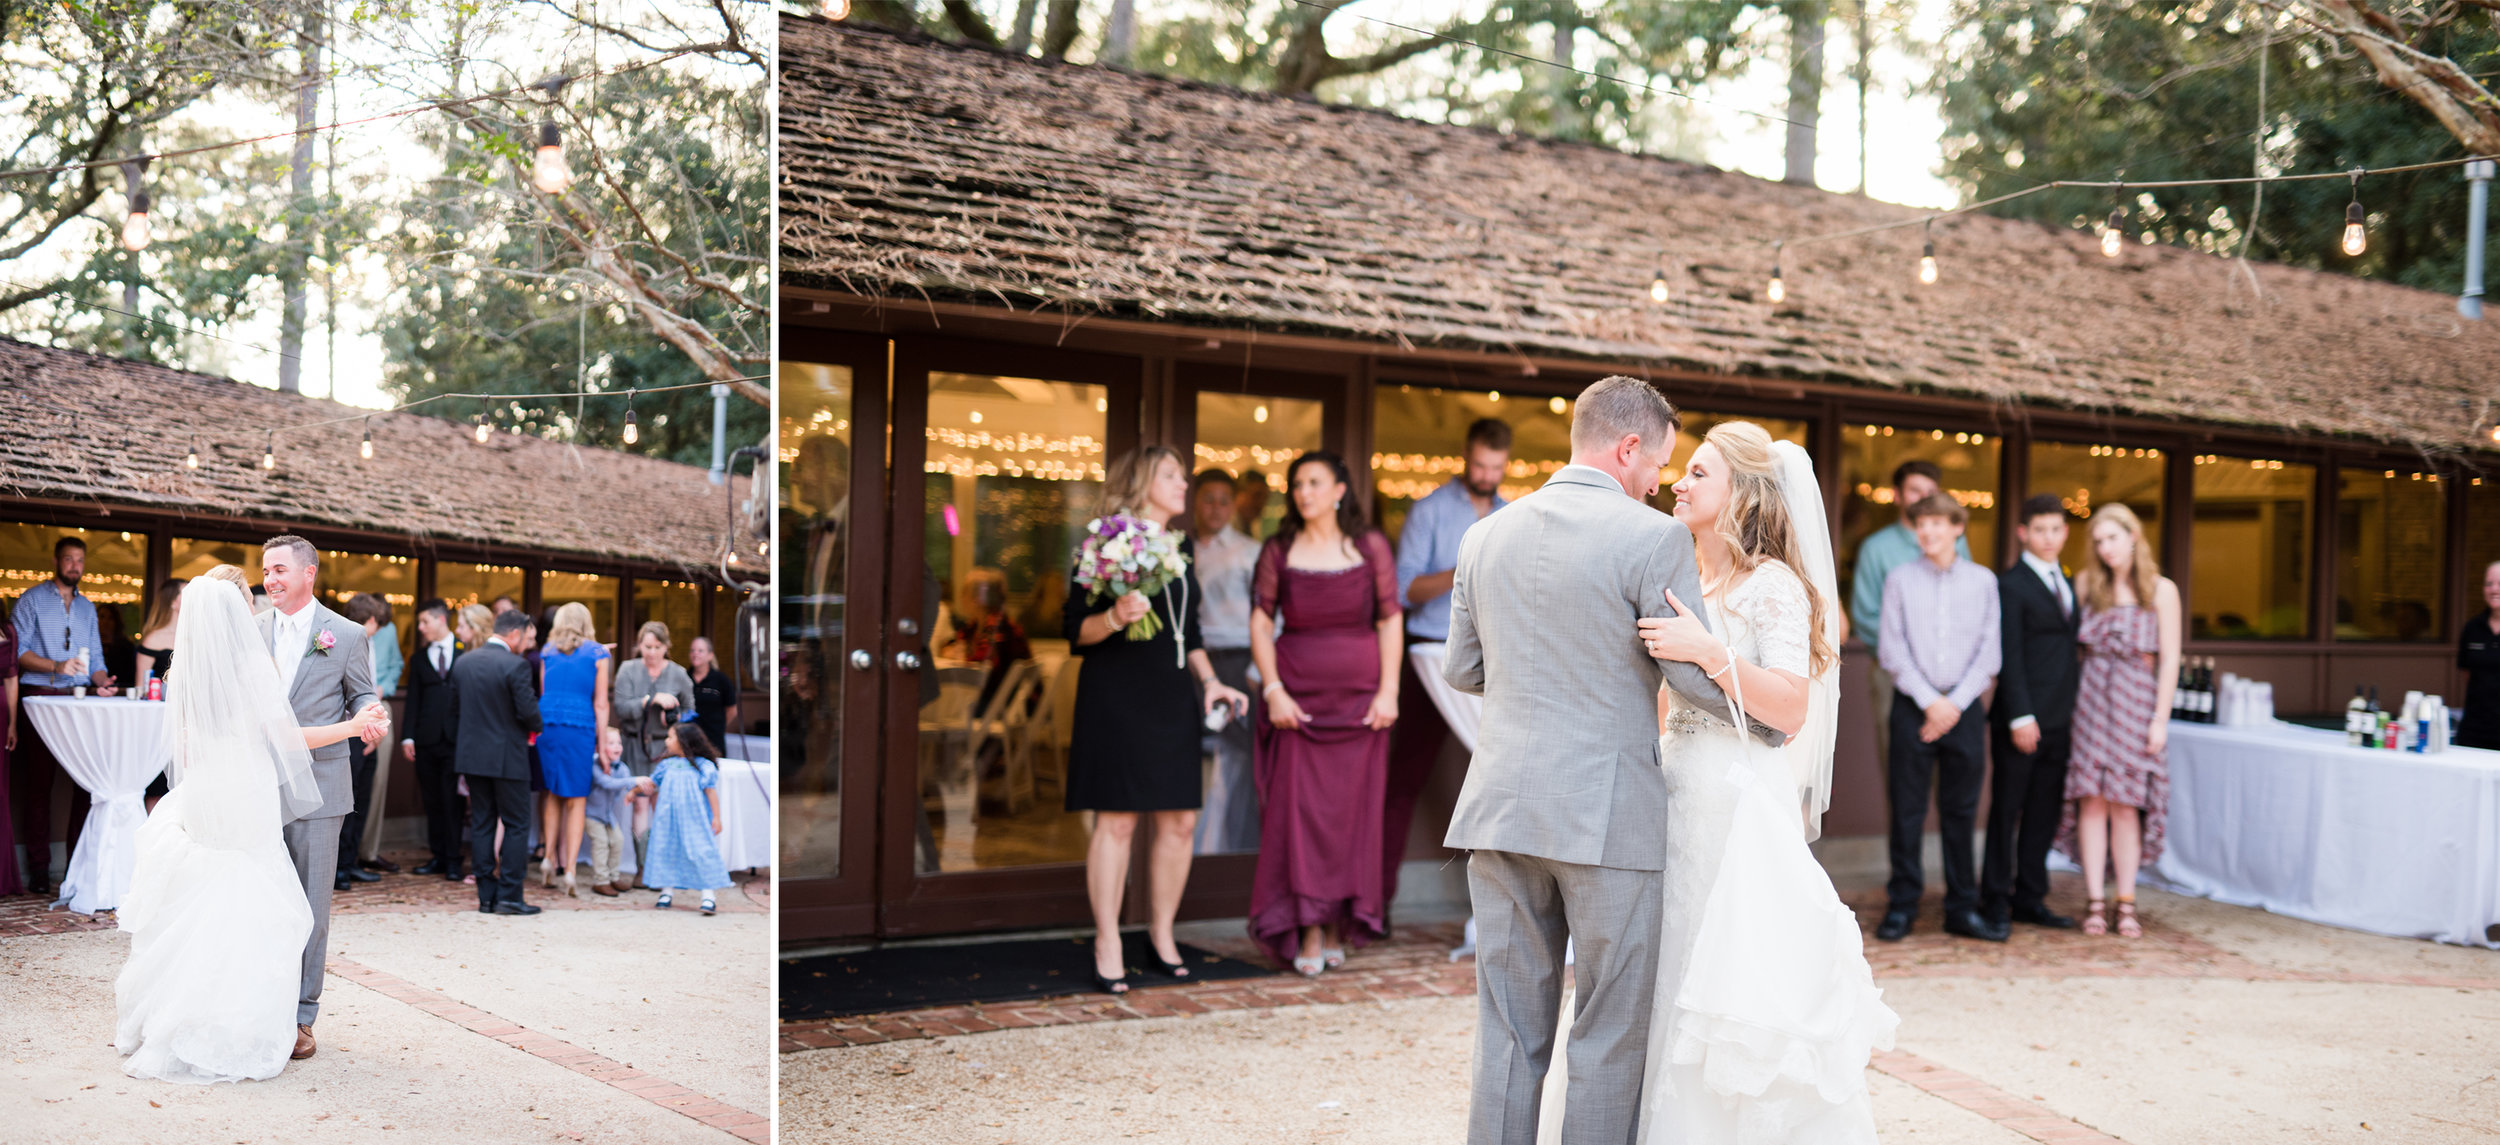 Church Wedding + Mobile Botanical Gardens Reception Photographed by Kristen Grubb Photography